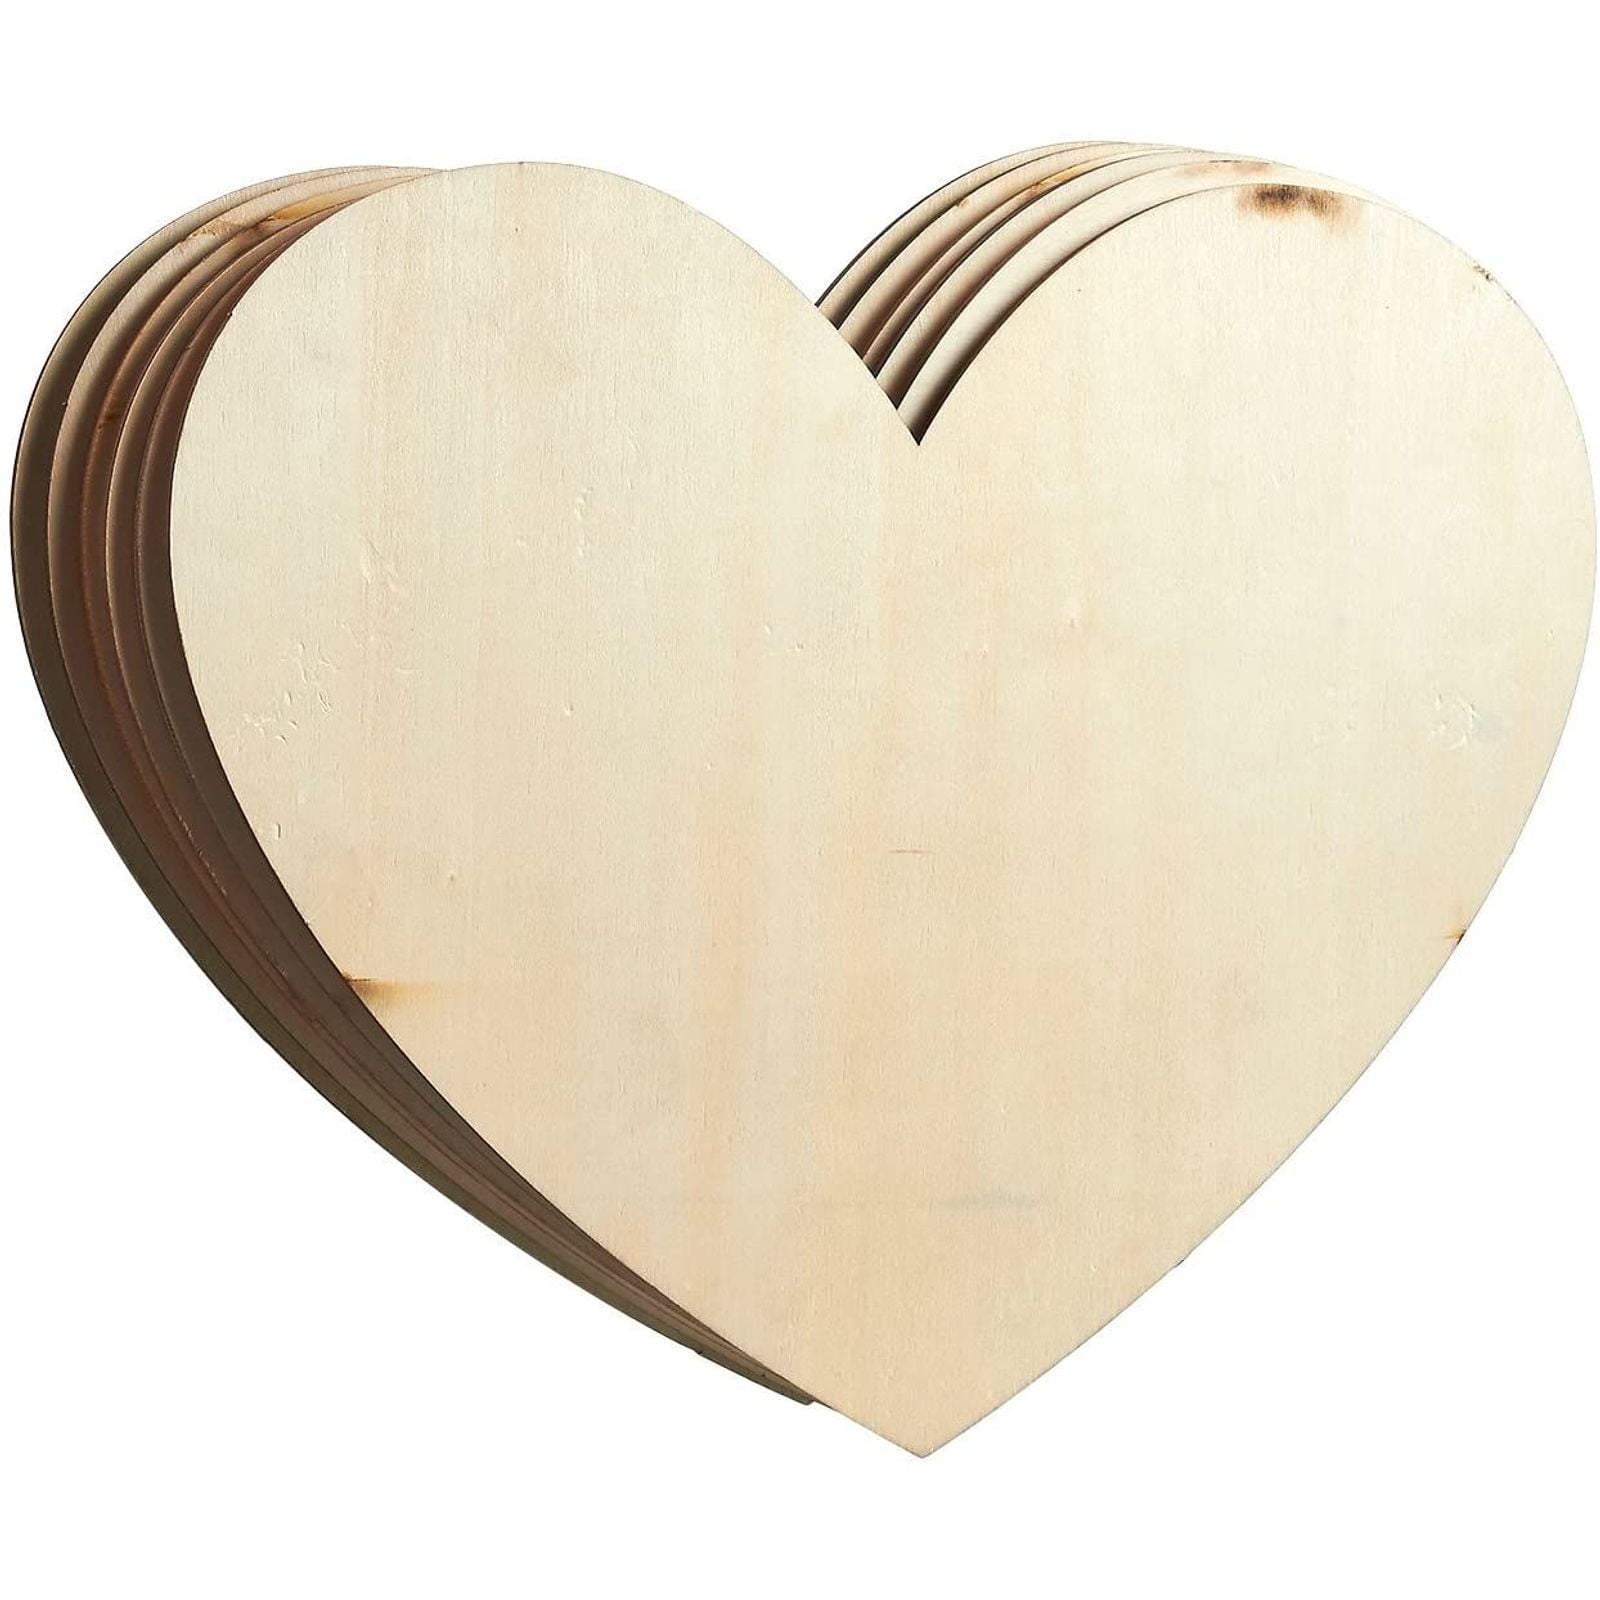 25x Wooden Hollow Heart Shapes Embellishments Wedding Table Decor 50 x 3mm 